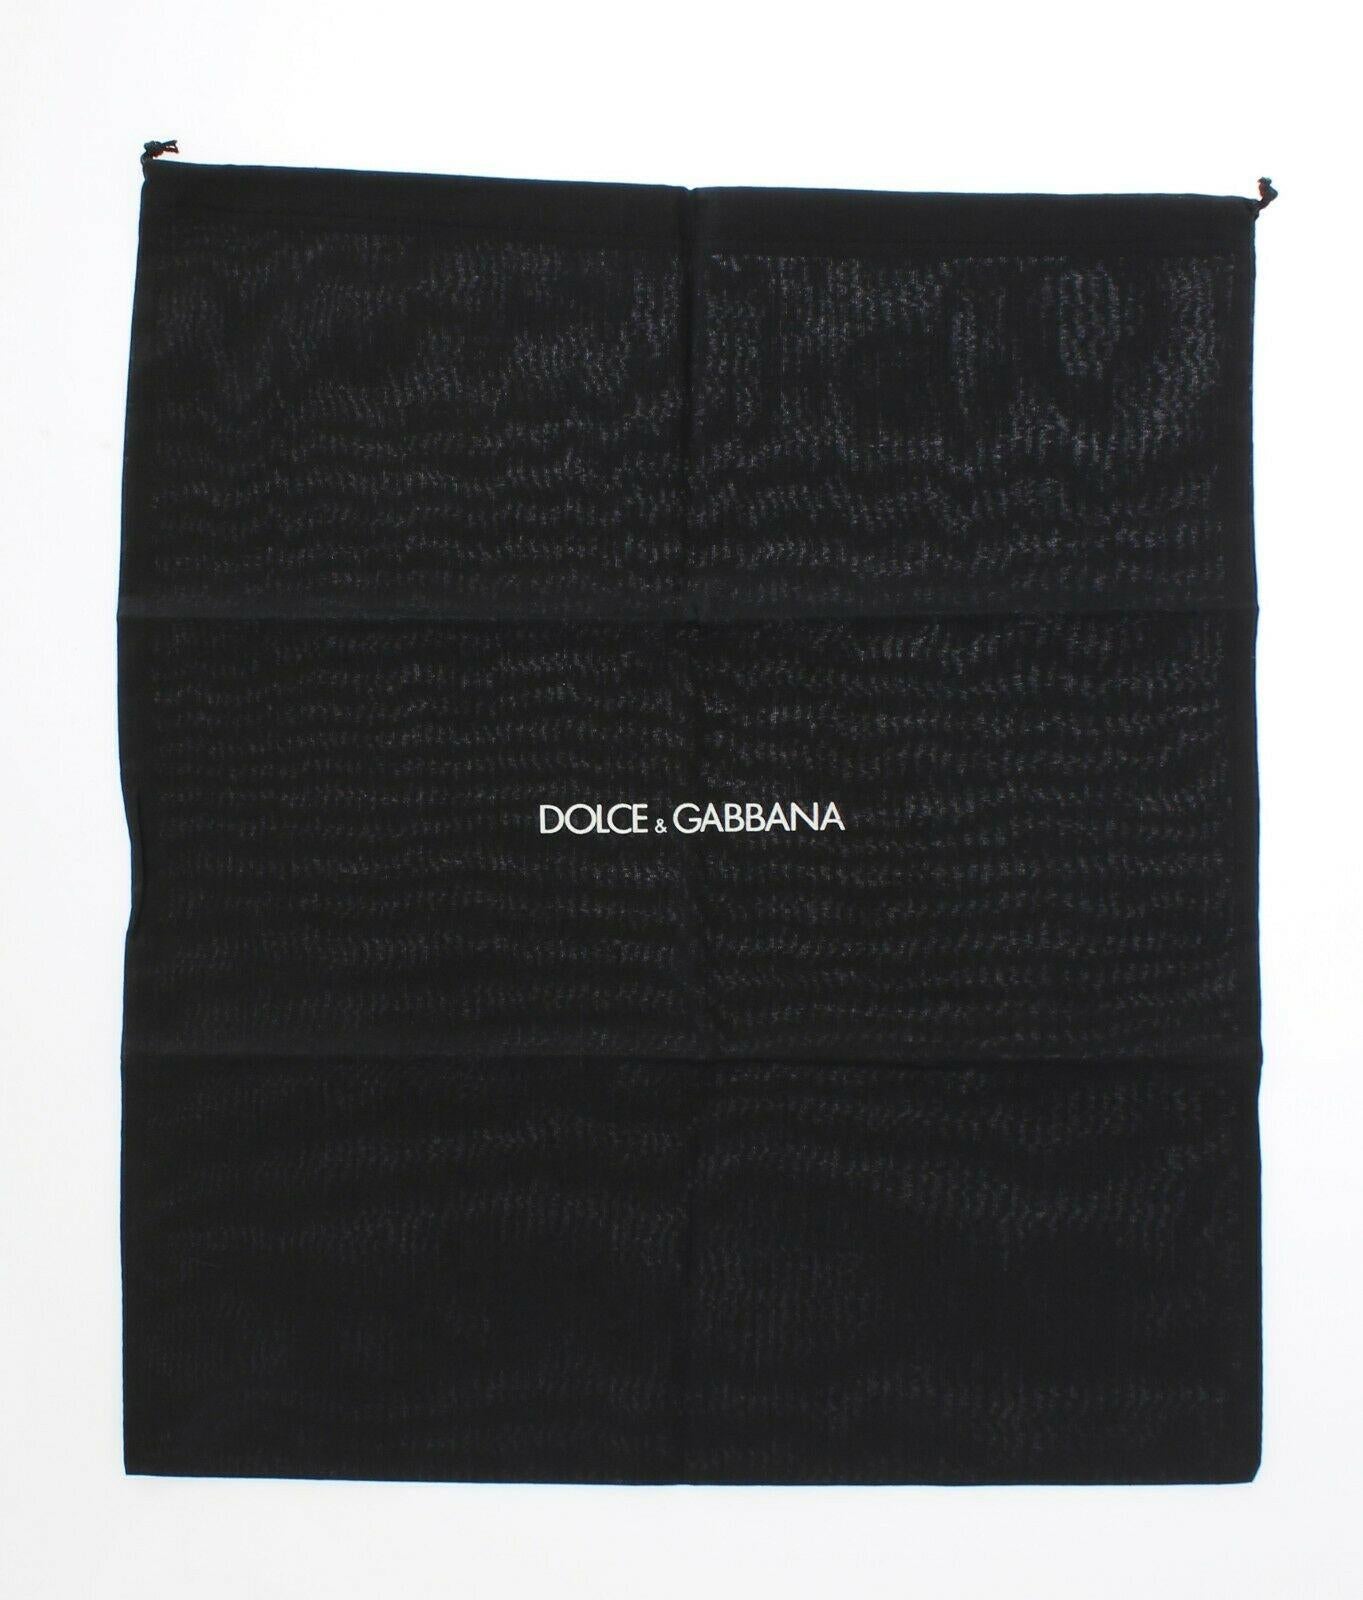 Dolce & Gabbana Black Gold Velvet Floral Box Bag Evening Party Clutch Purse 3